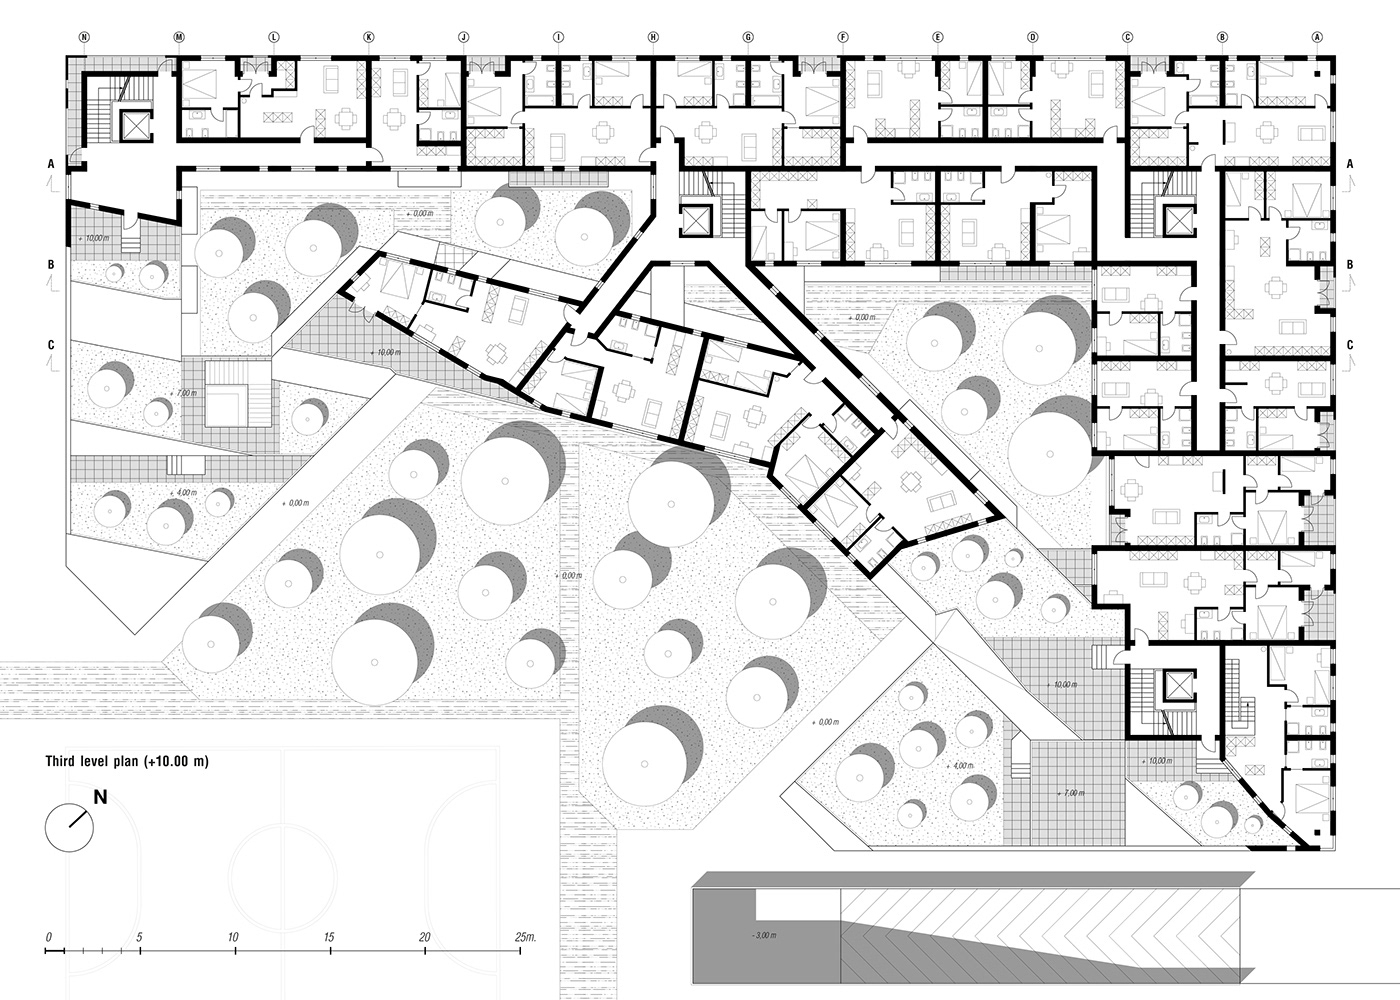 architecture bovisa social housing milan design art graphic residential building